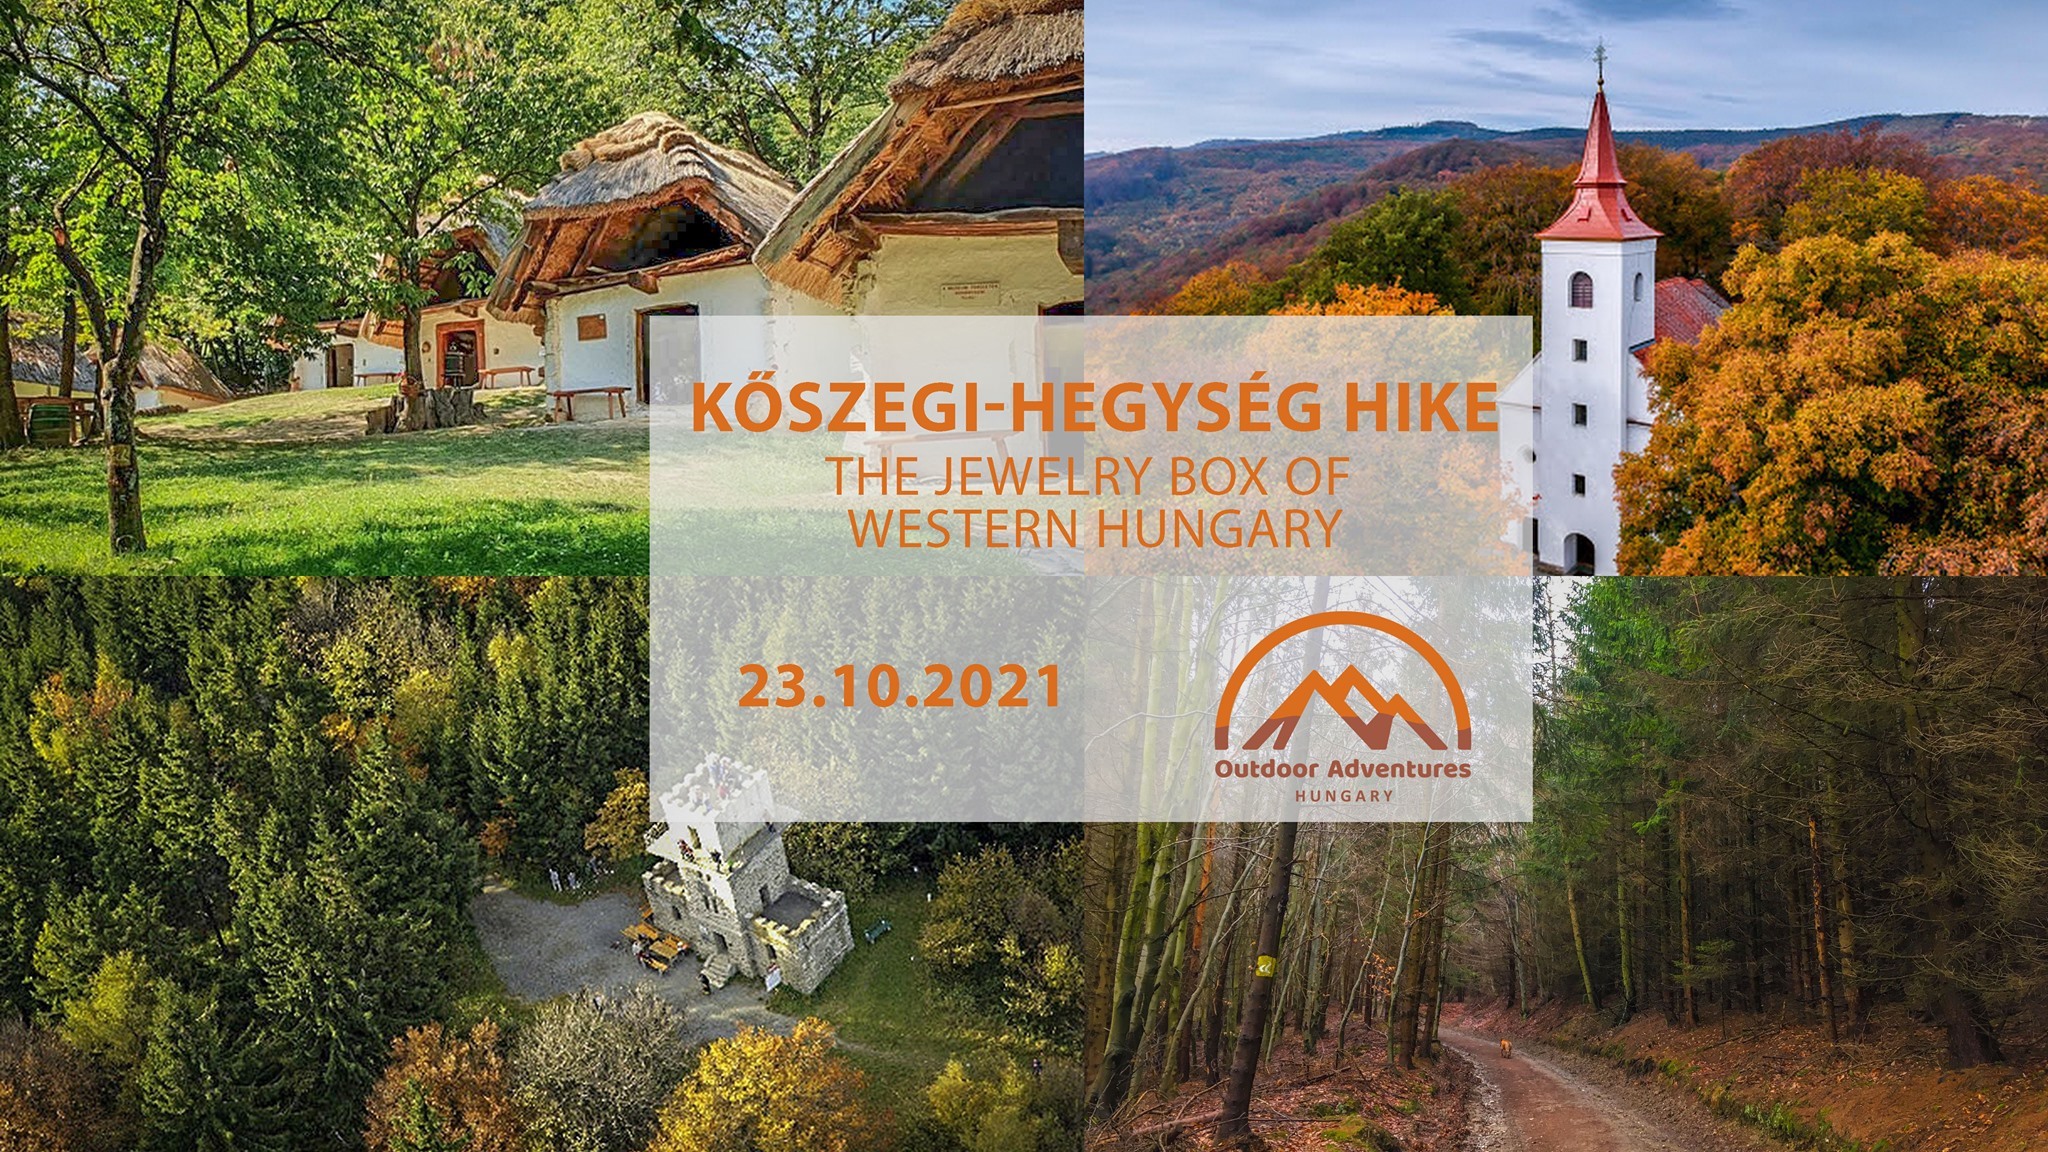 Hike the Kőszegi-hegy  - The Jewelry Box of Western Hungary, 23 October